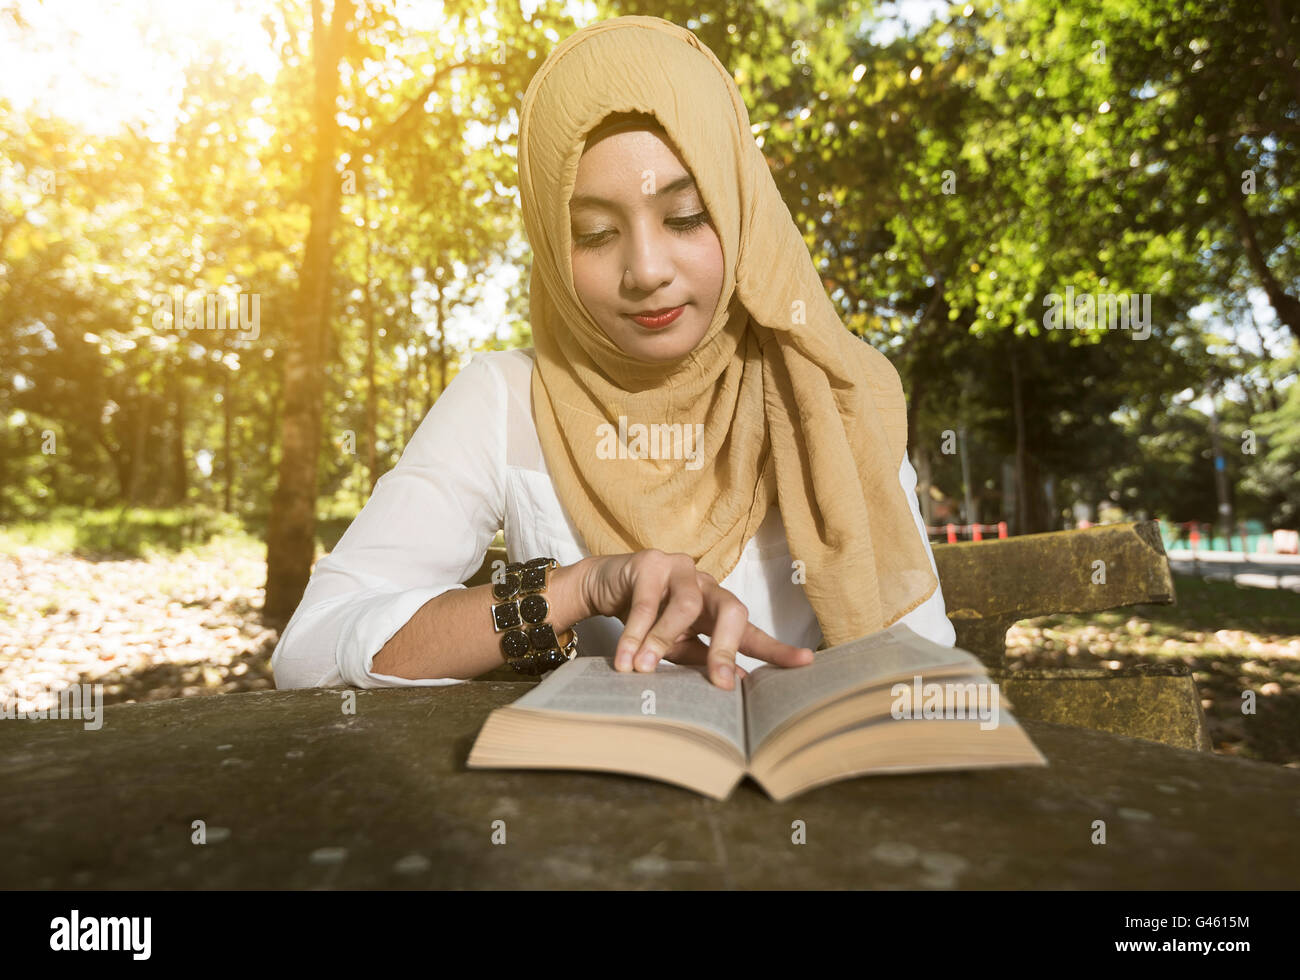 muslim woman student reading book Stock Photo